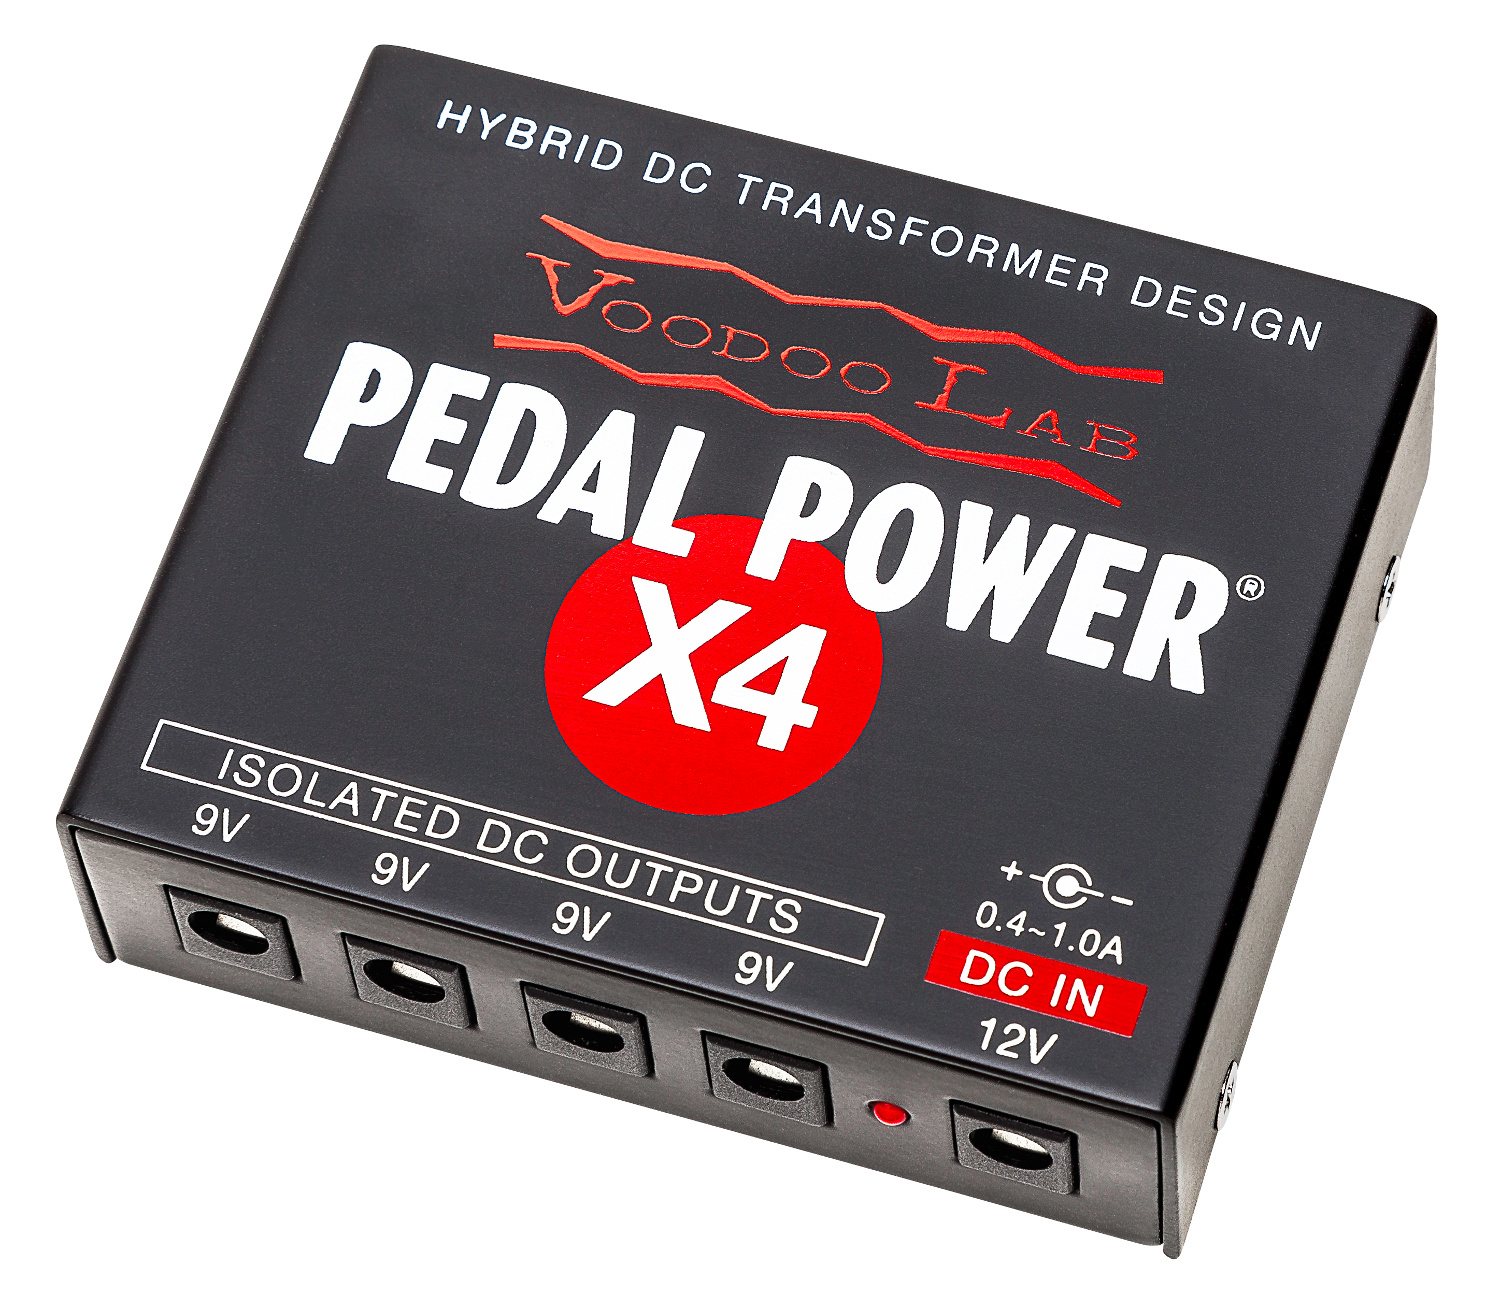 Voodoo Lab Pedal Power ×4 パワーサプライ